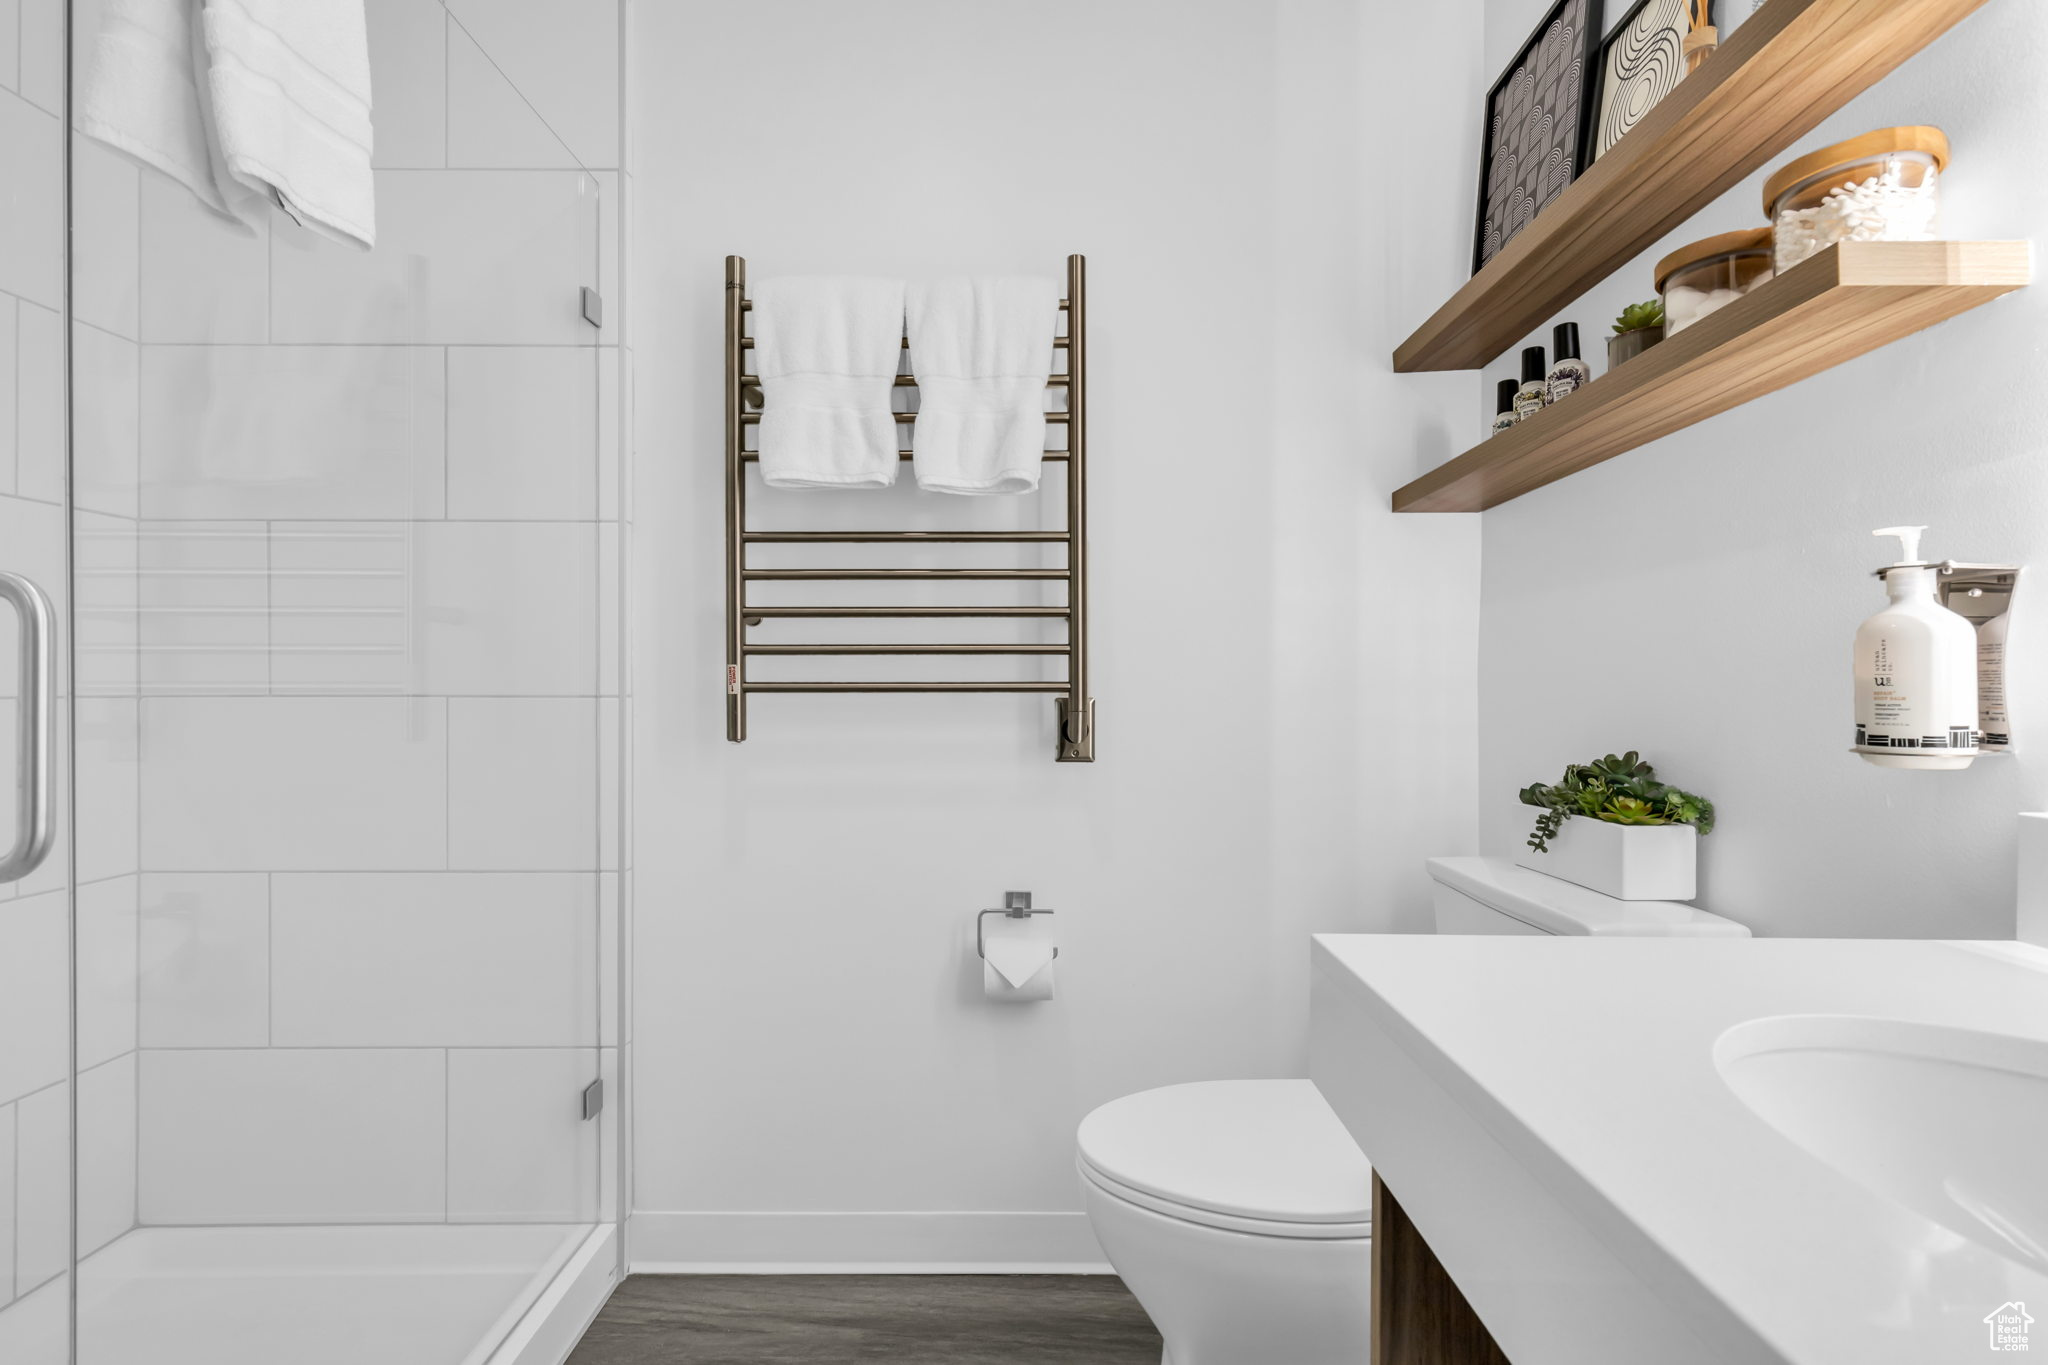 Bathroom with vanity, a shower with door, hardwood / wood-style flooring, toilet, and radiator